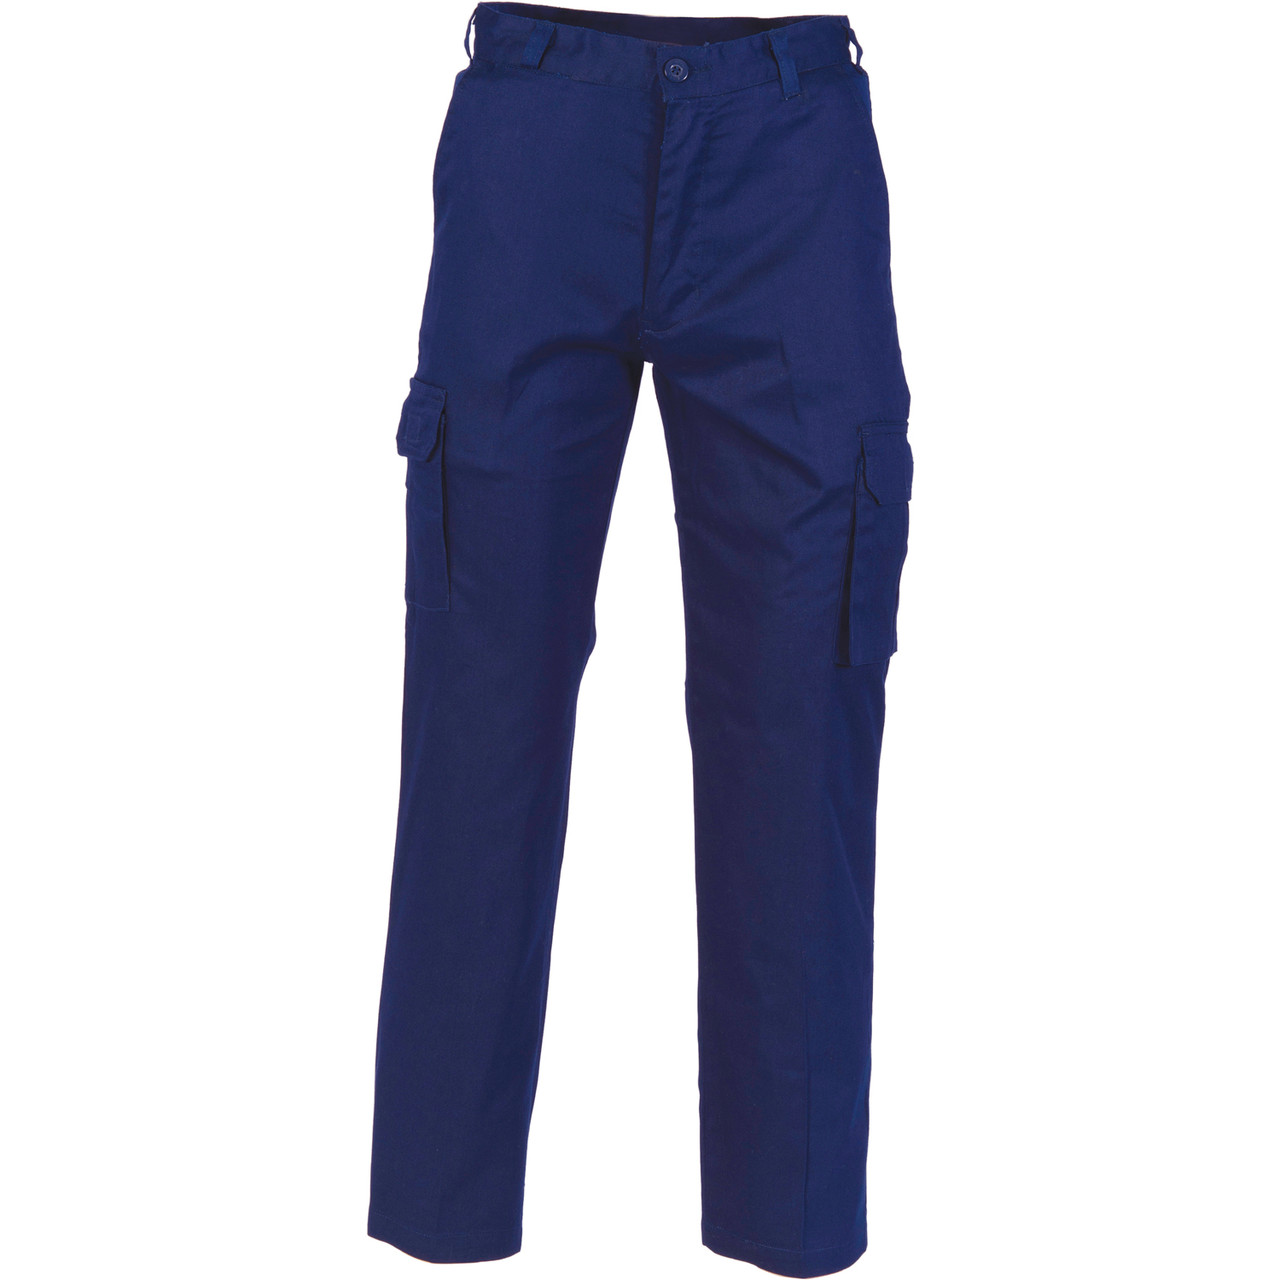 Wholesale Outdoor Fashionable Summer Thin Cotton Casual Mens Pants  China  Mens Pants and Casual Mens Pants price  MadeinChinacom